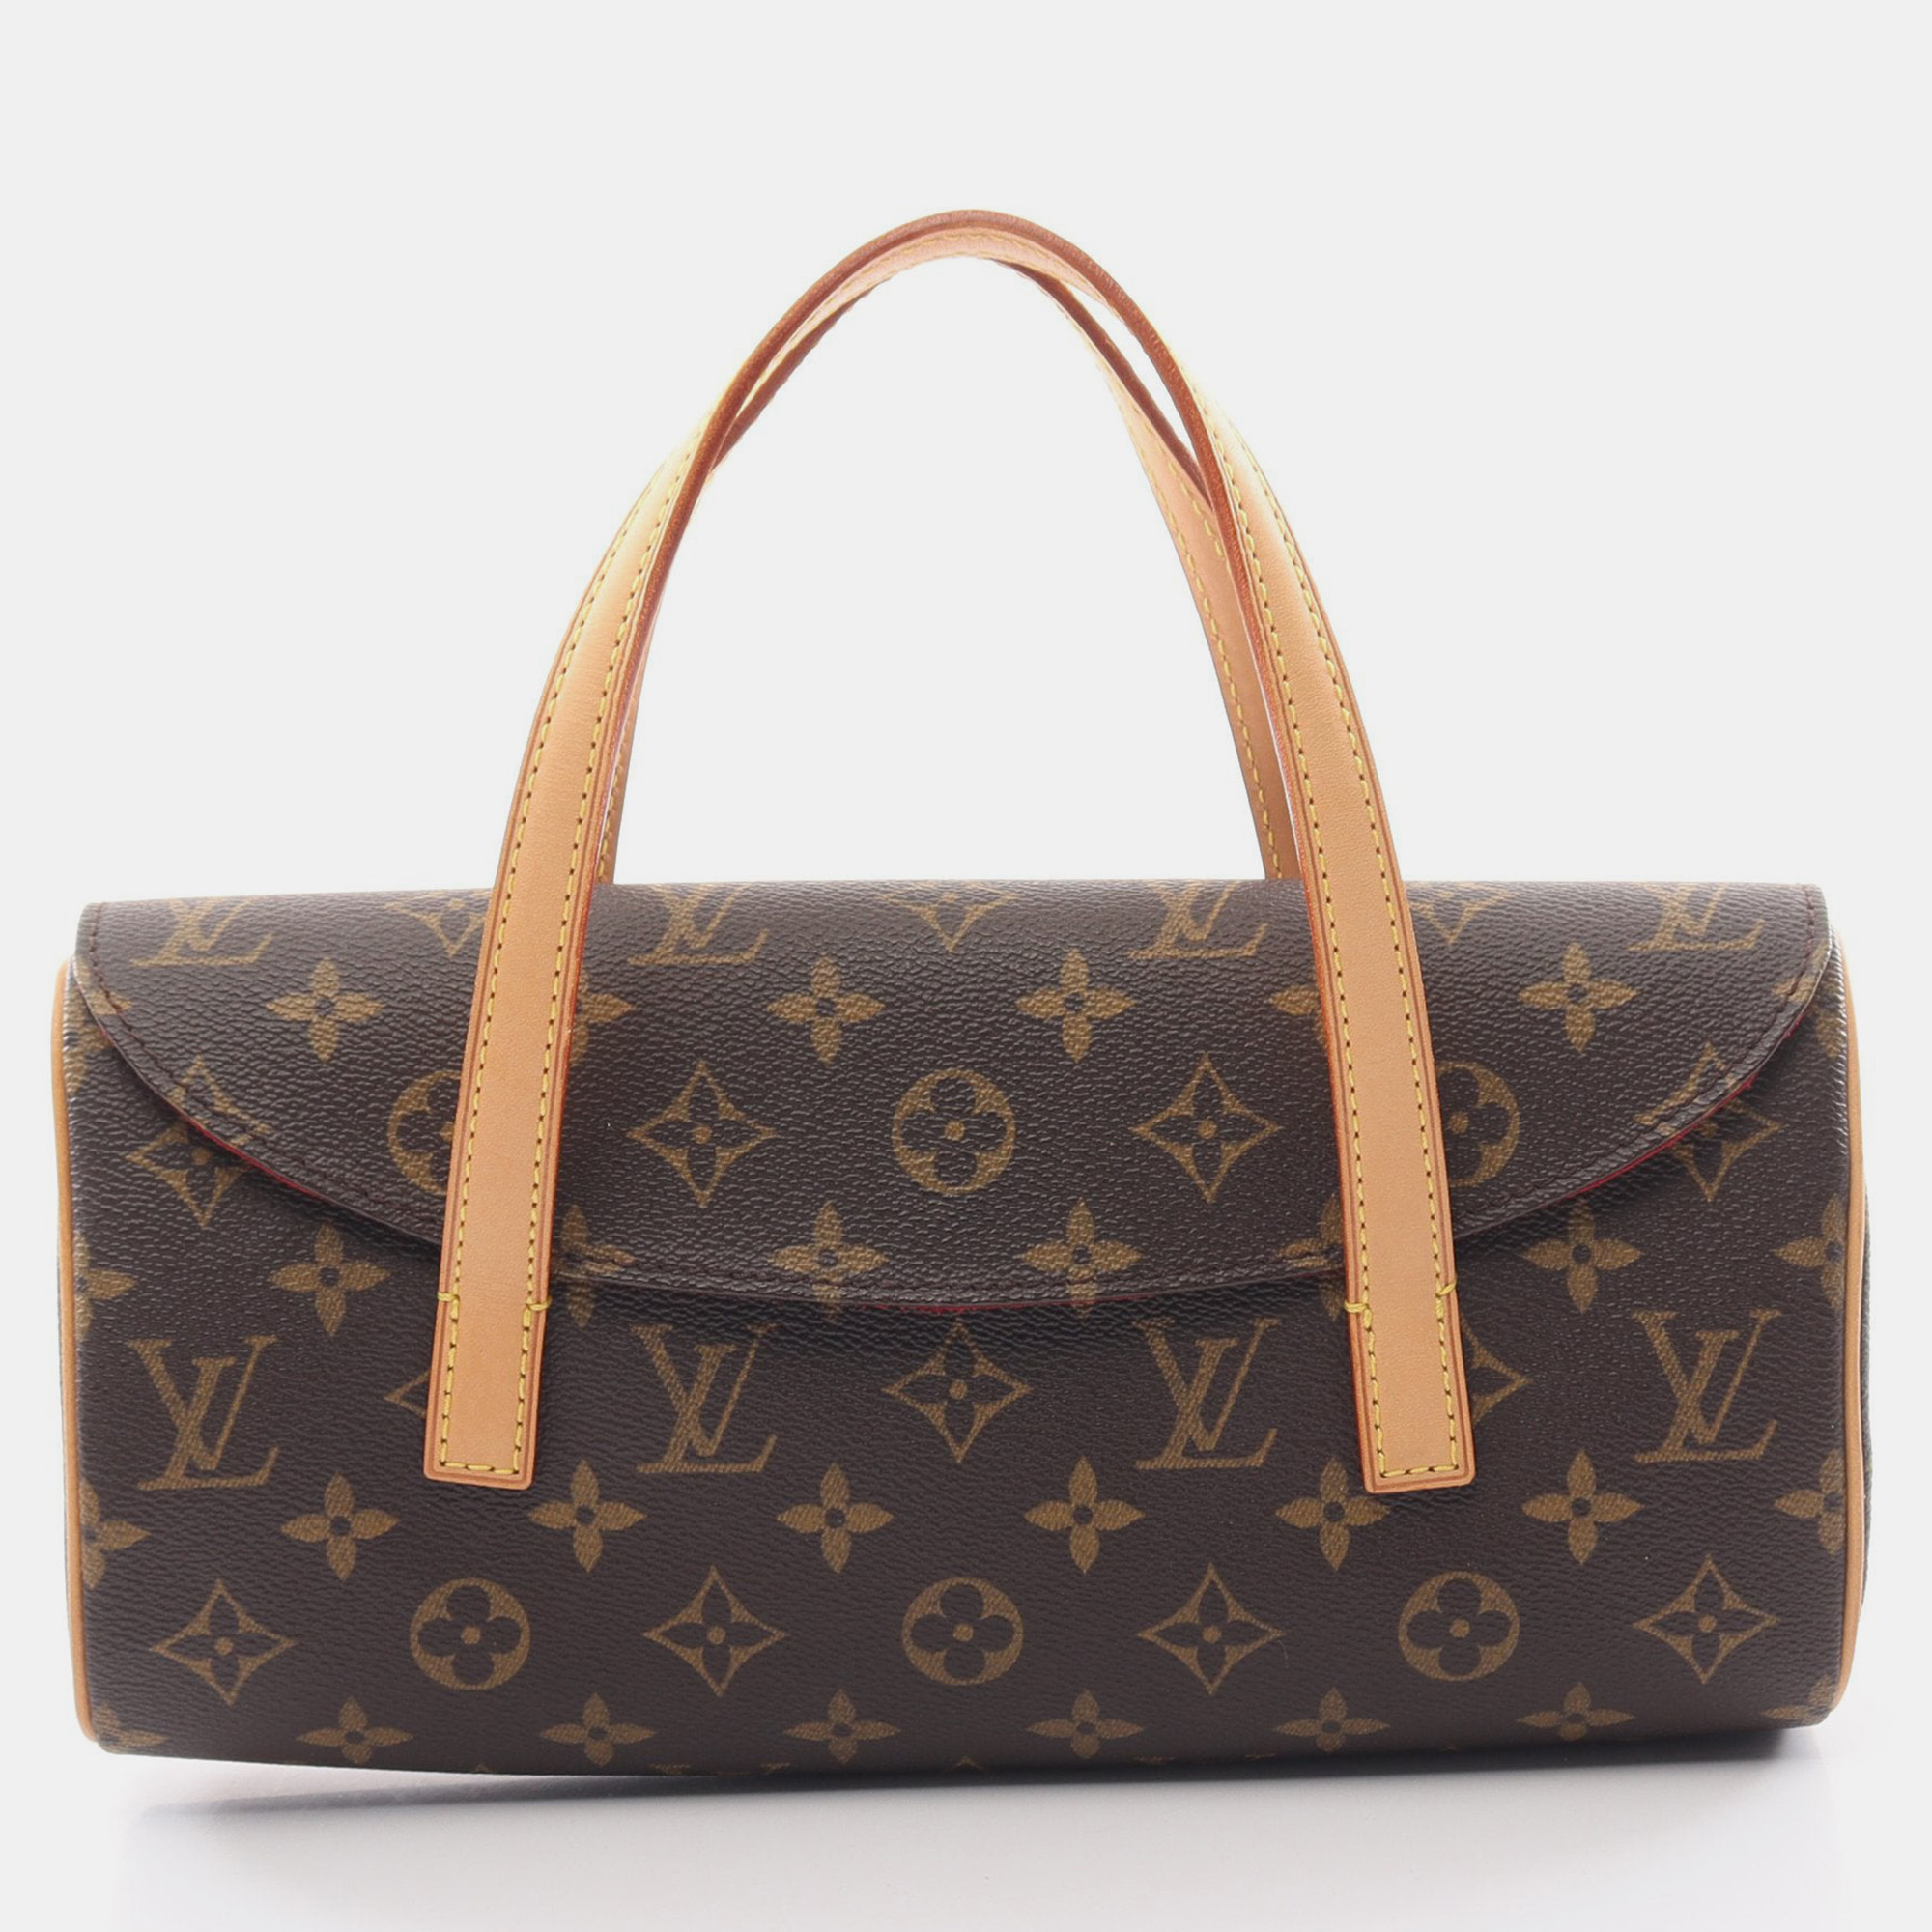 Louis vuitton sonatine monogram handbag pvc leather brown